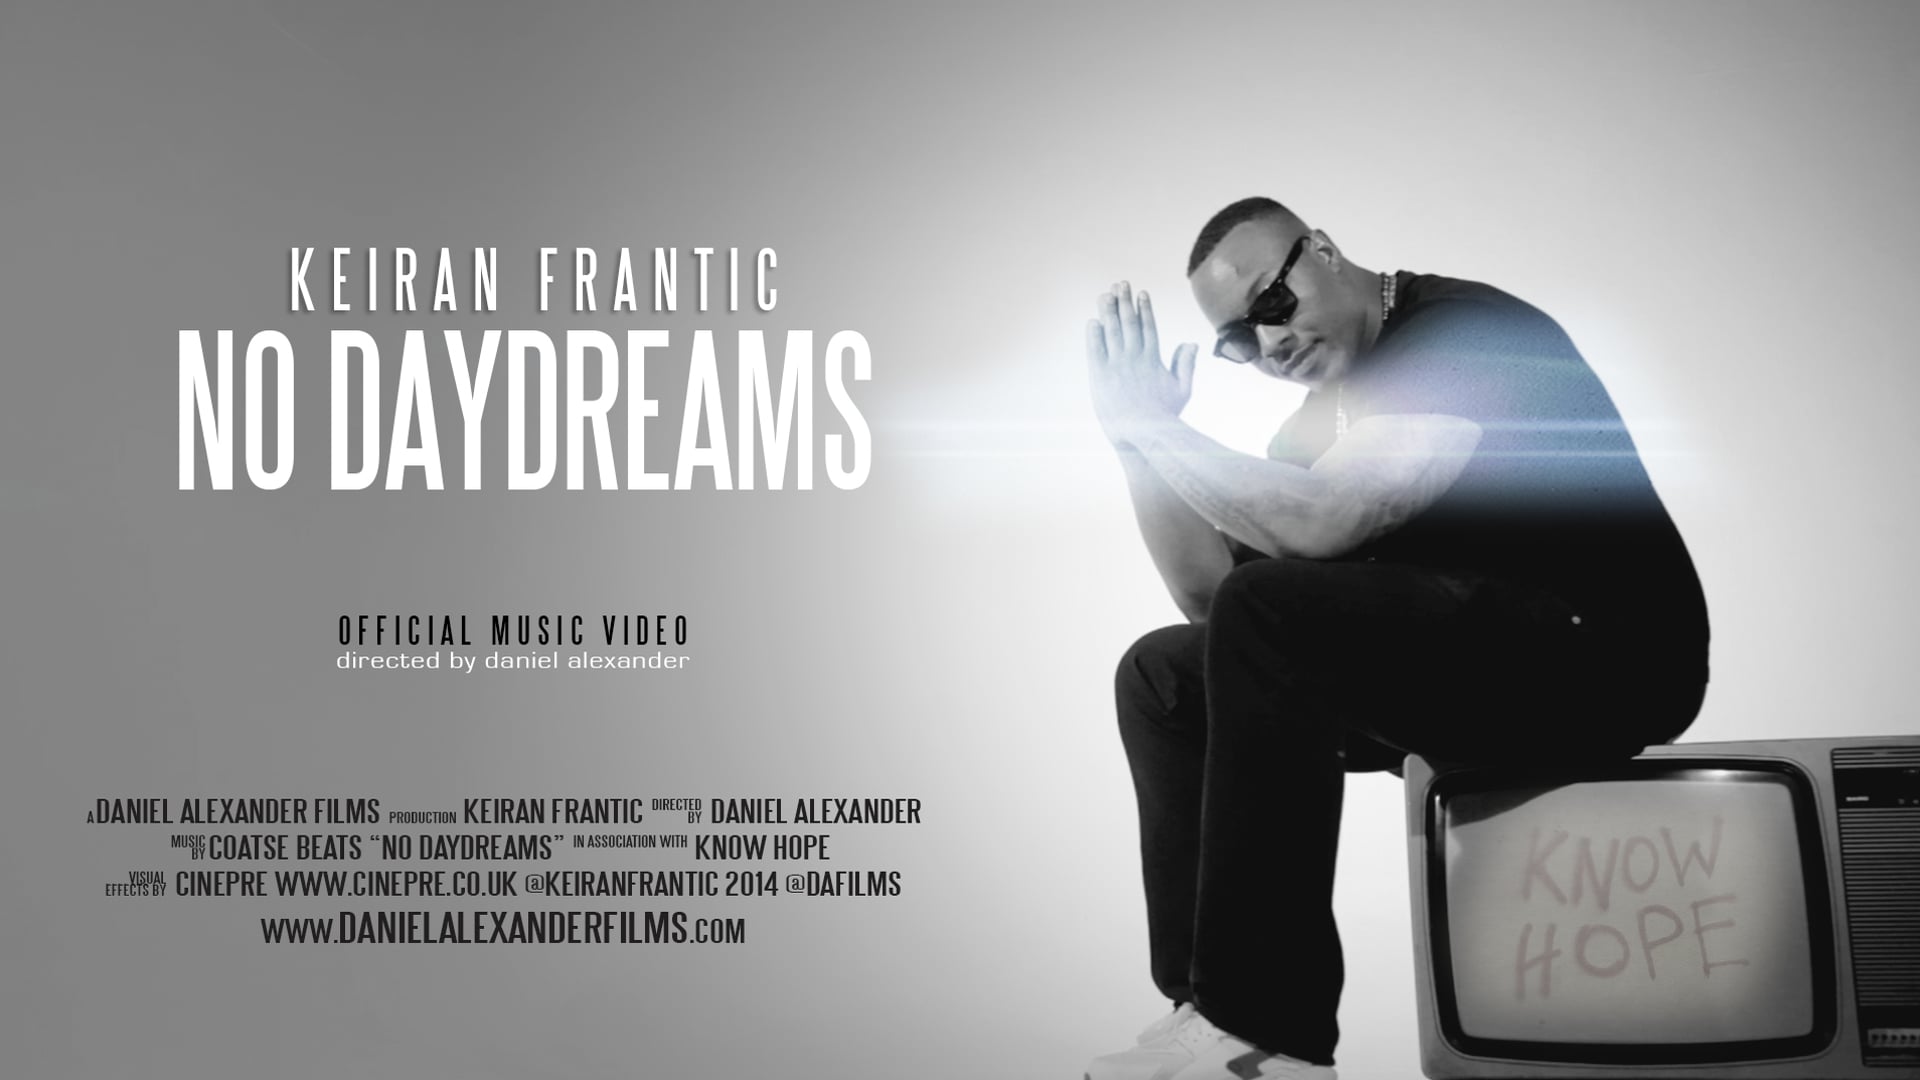 Keiran Frantic "NO DAYDREAMS" Official Music Video